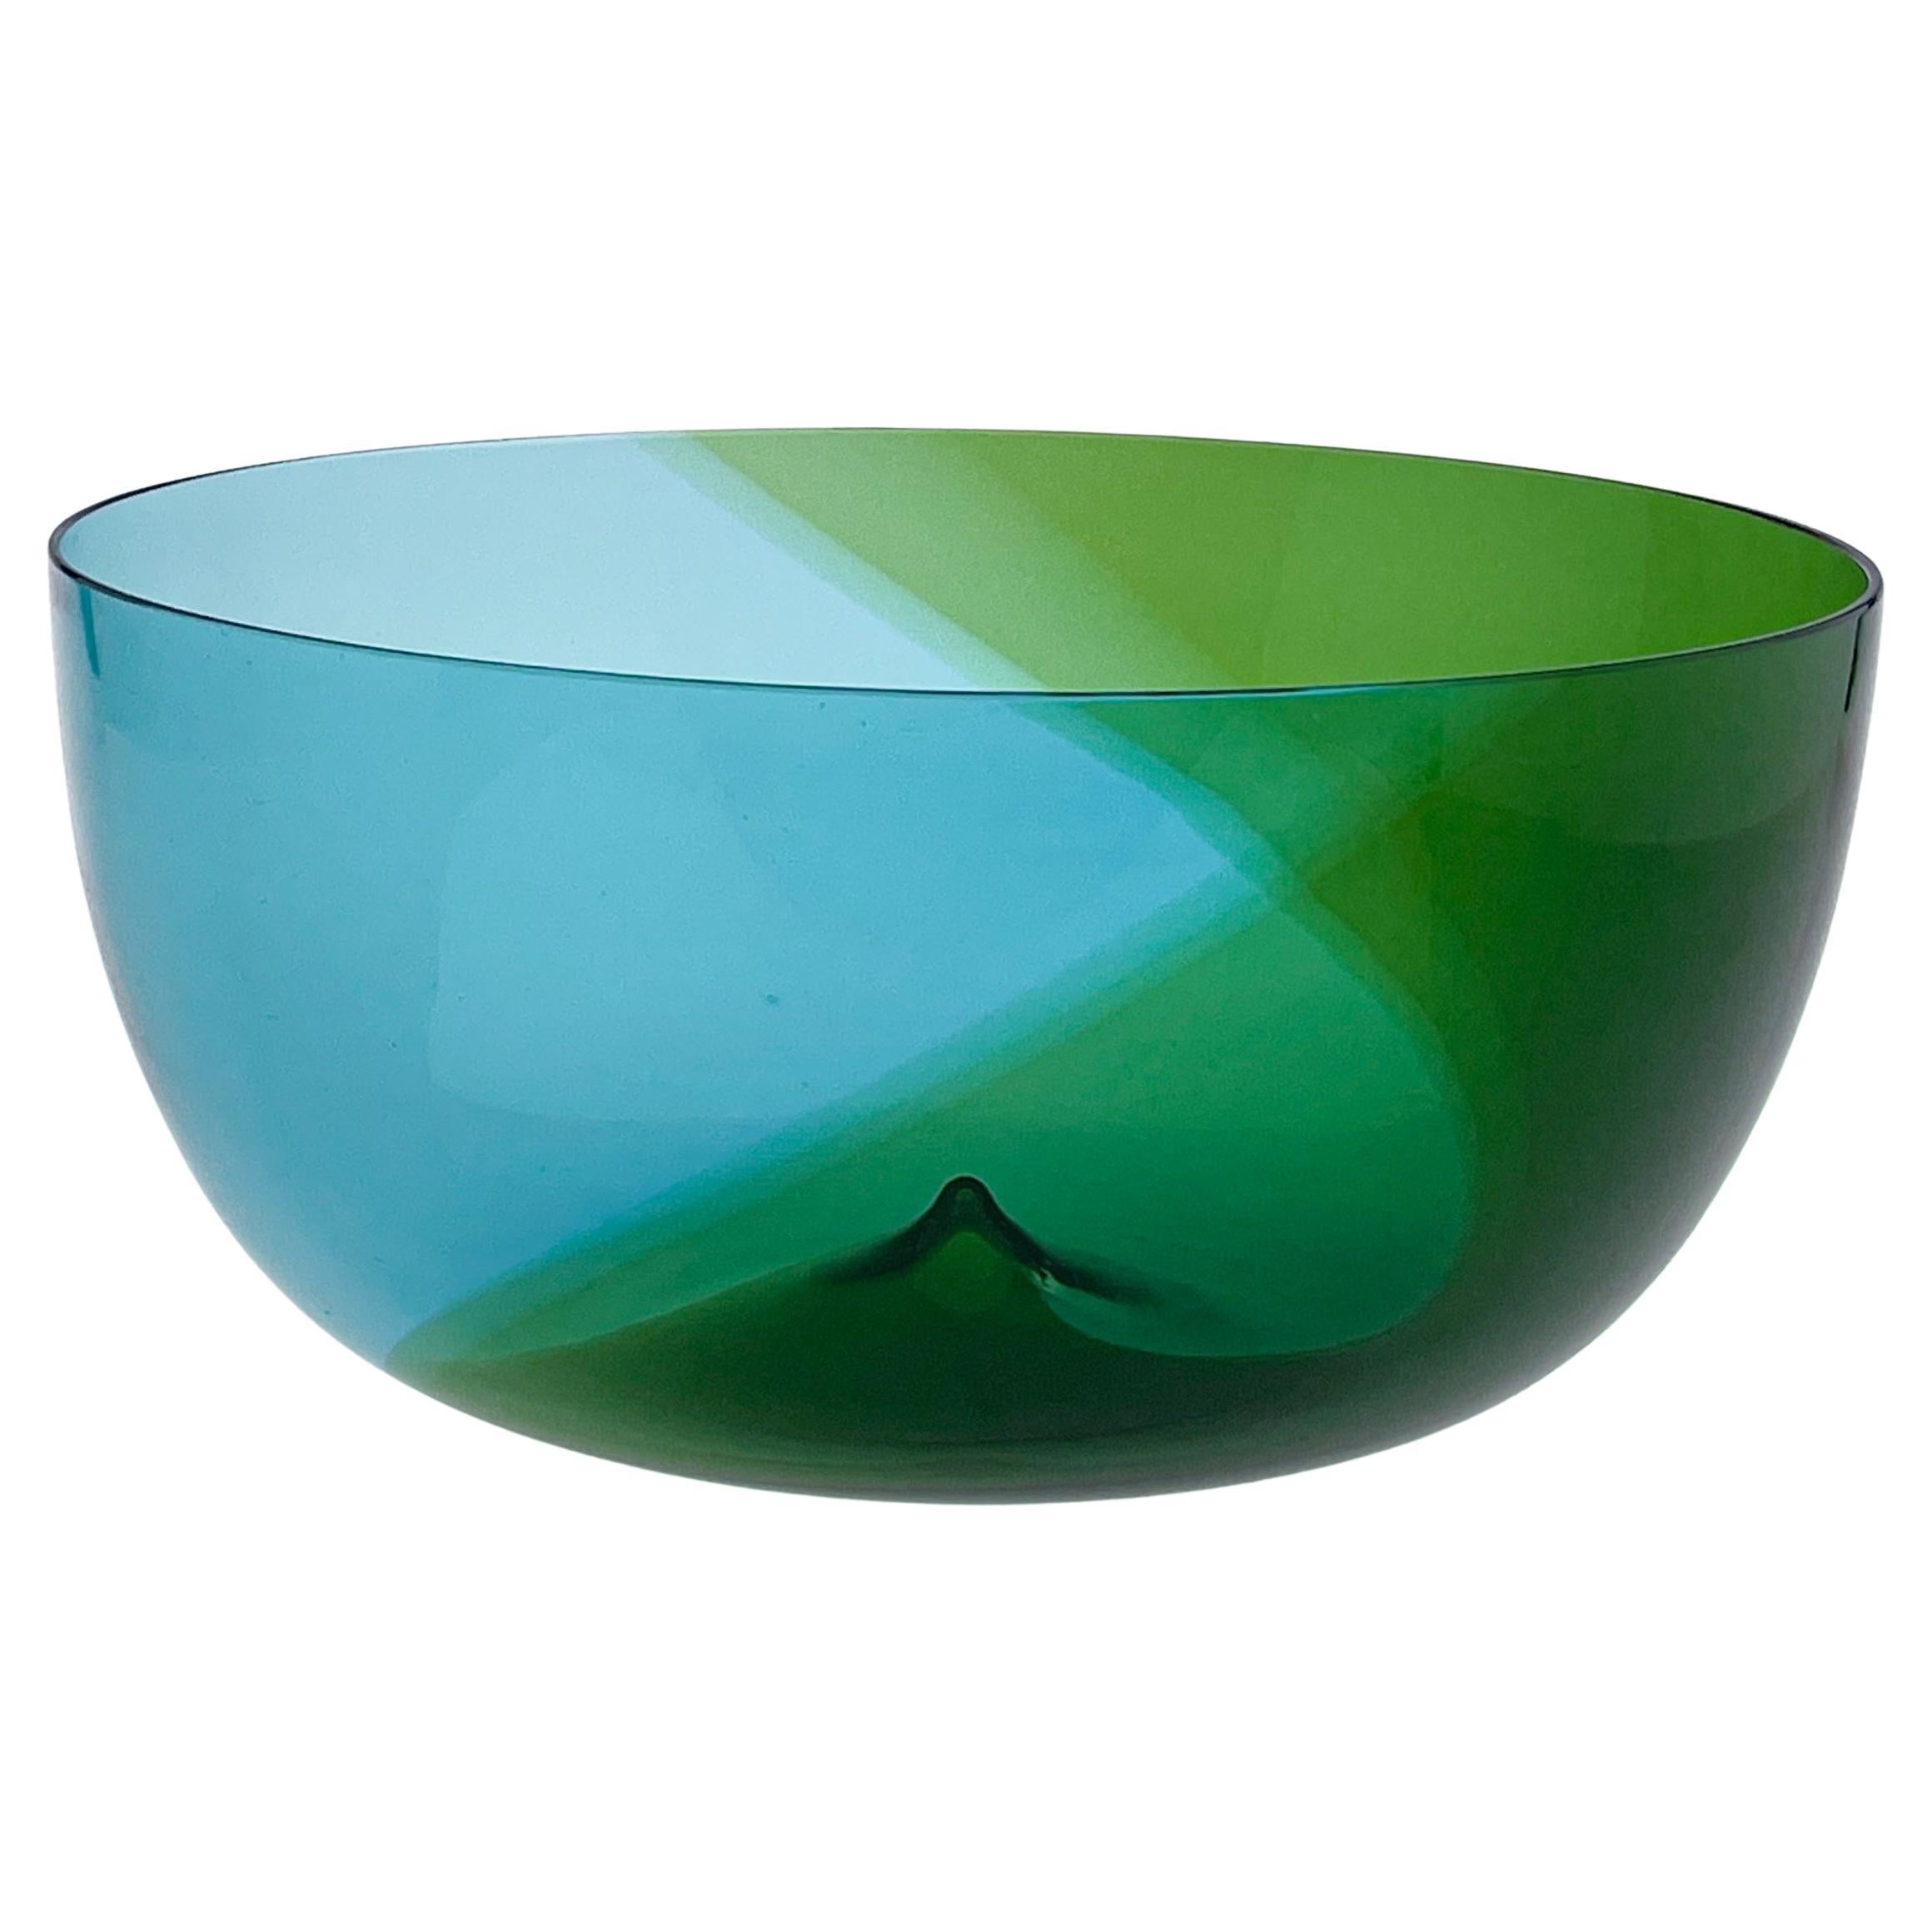 Murano Tapio Wirkkala Art Glass bowl "Coreano" green turquoise handblown Venini For Sale